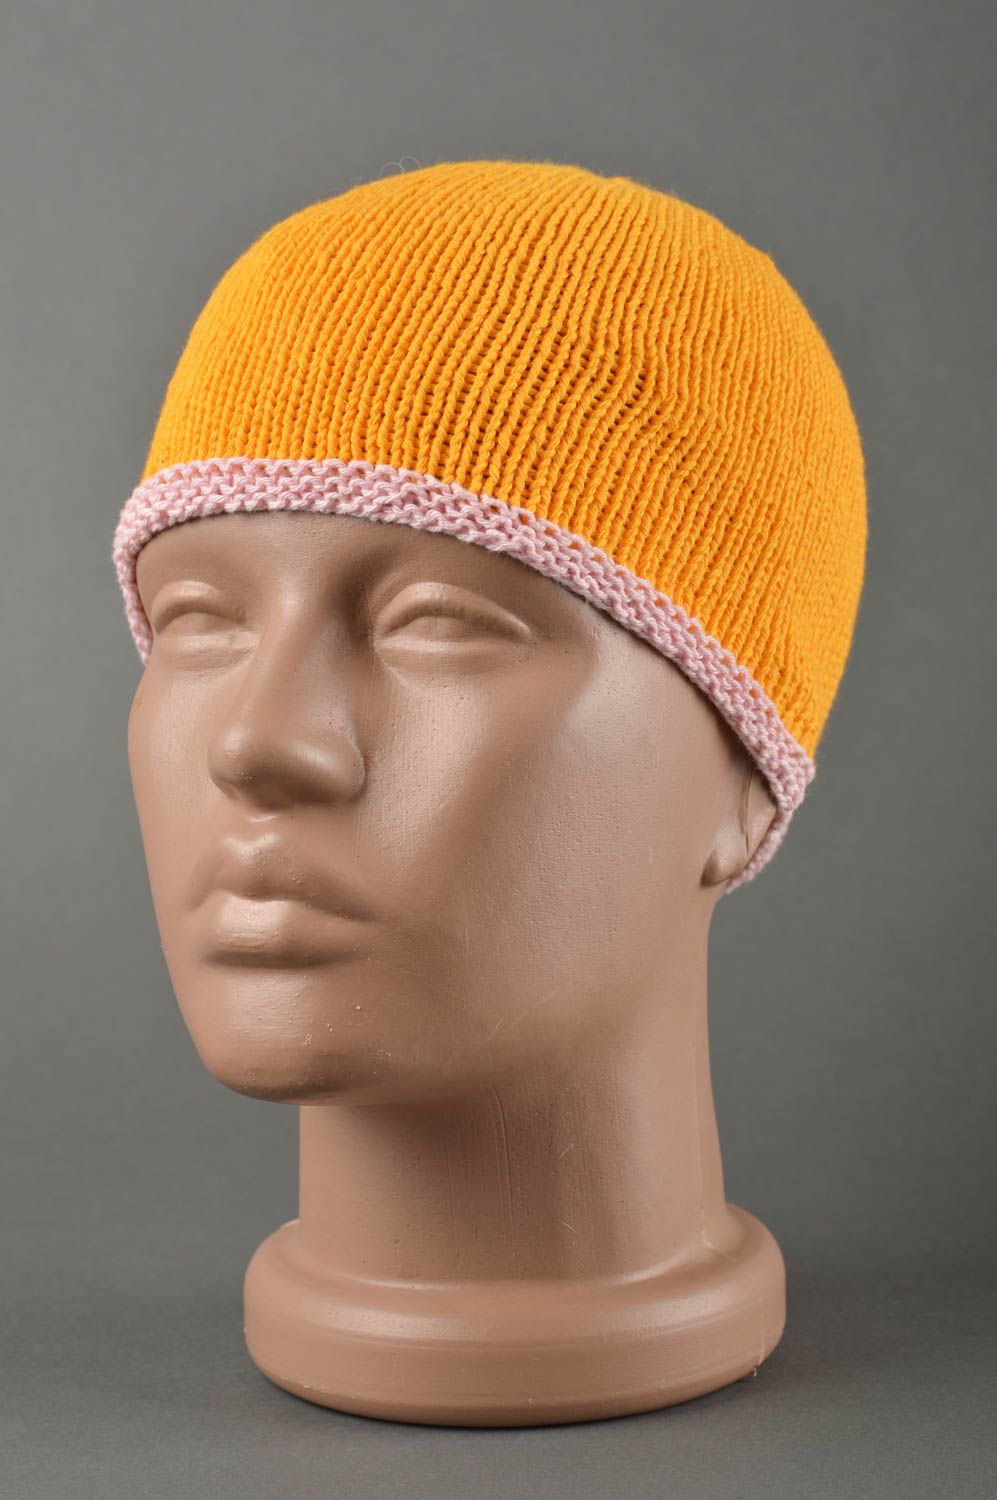 Handmade crochet baby hat designer hats warm hat kids accessories gifts for kids photo 1